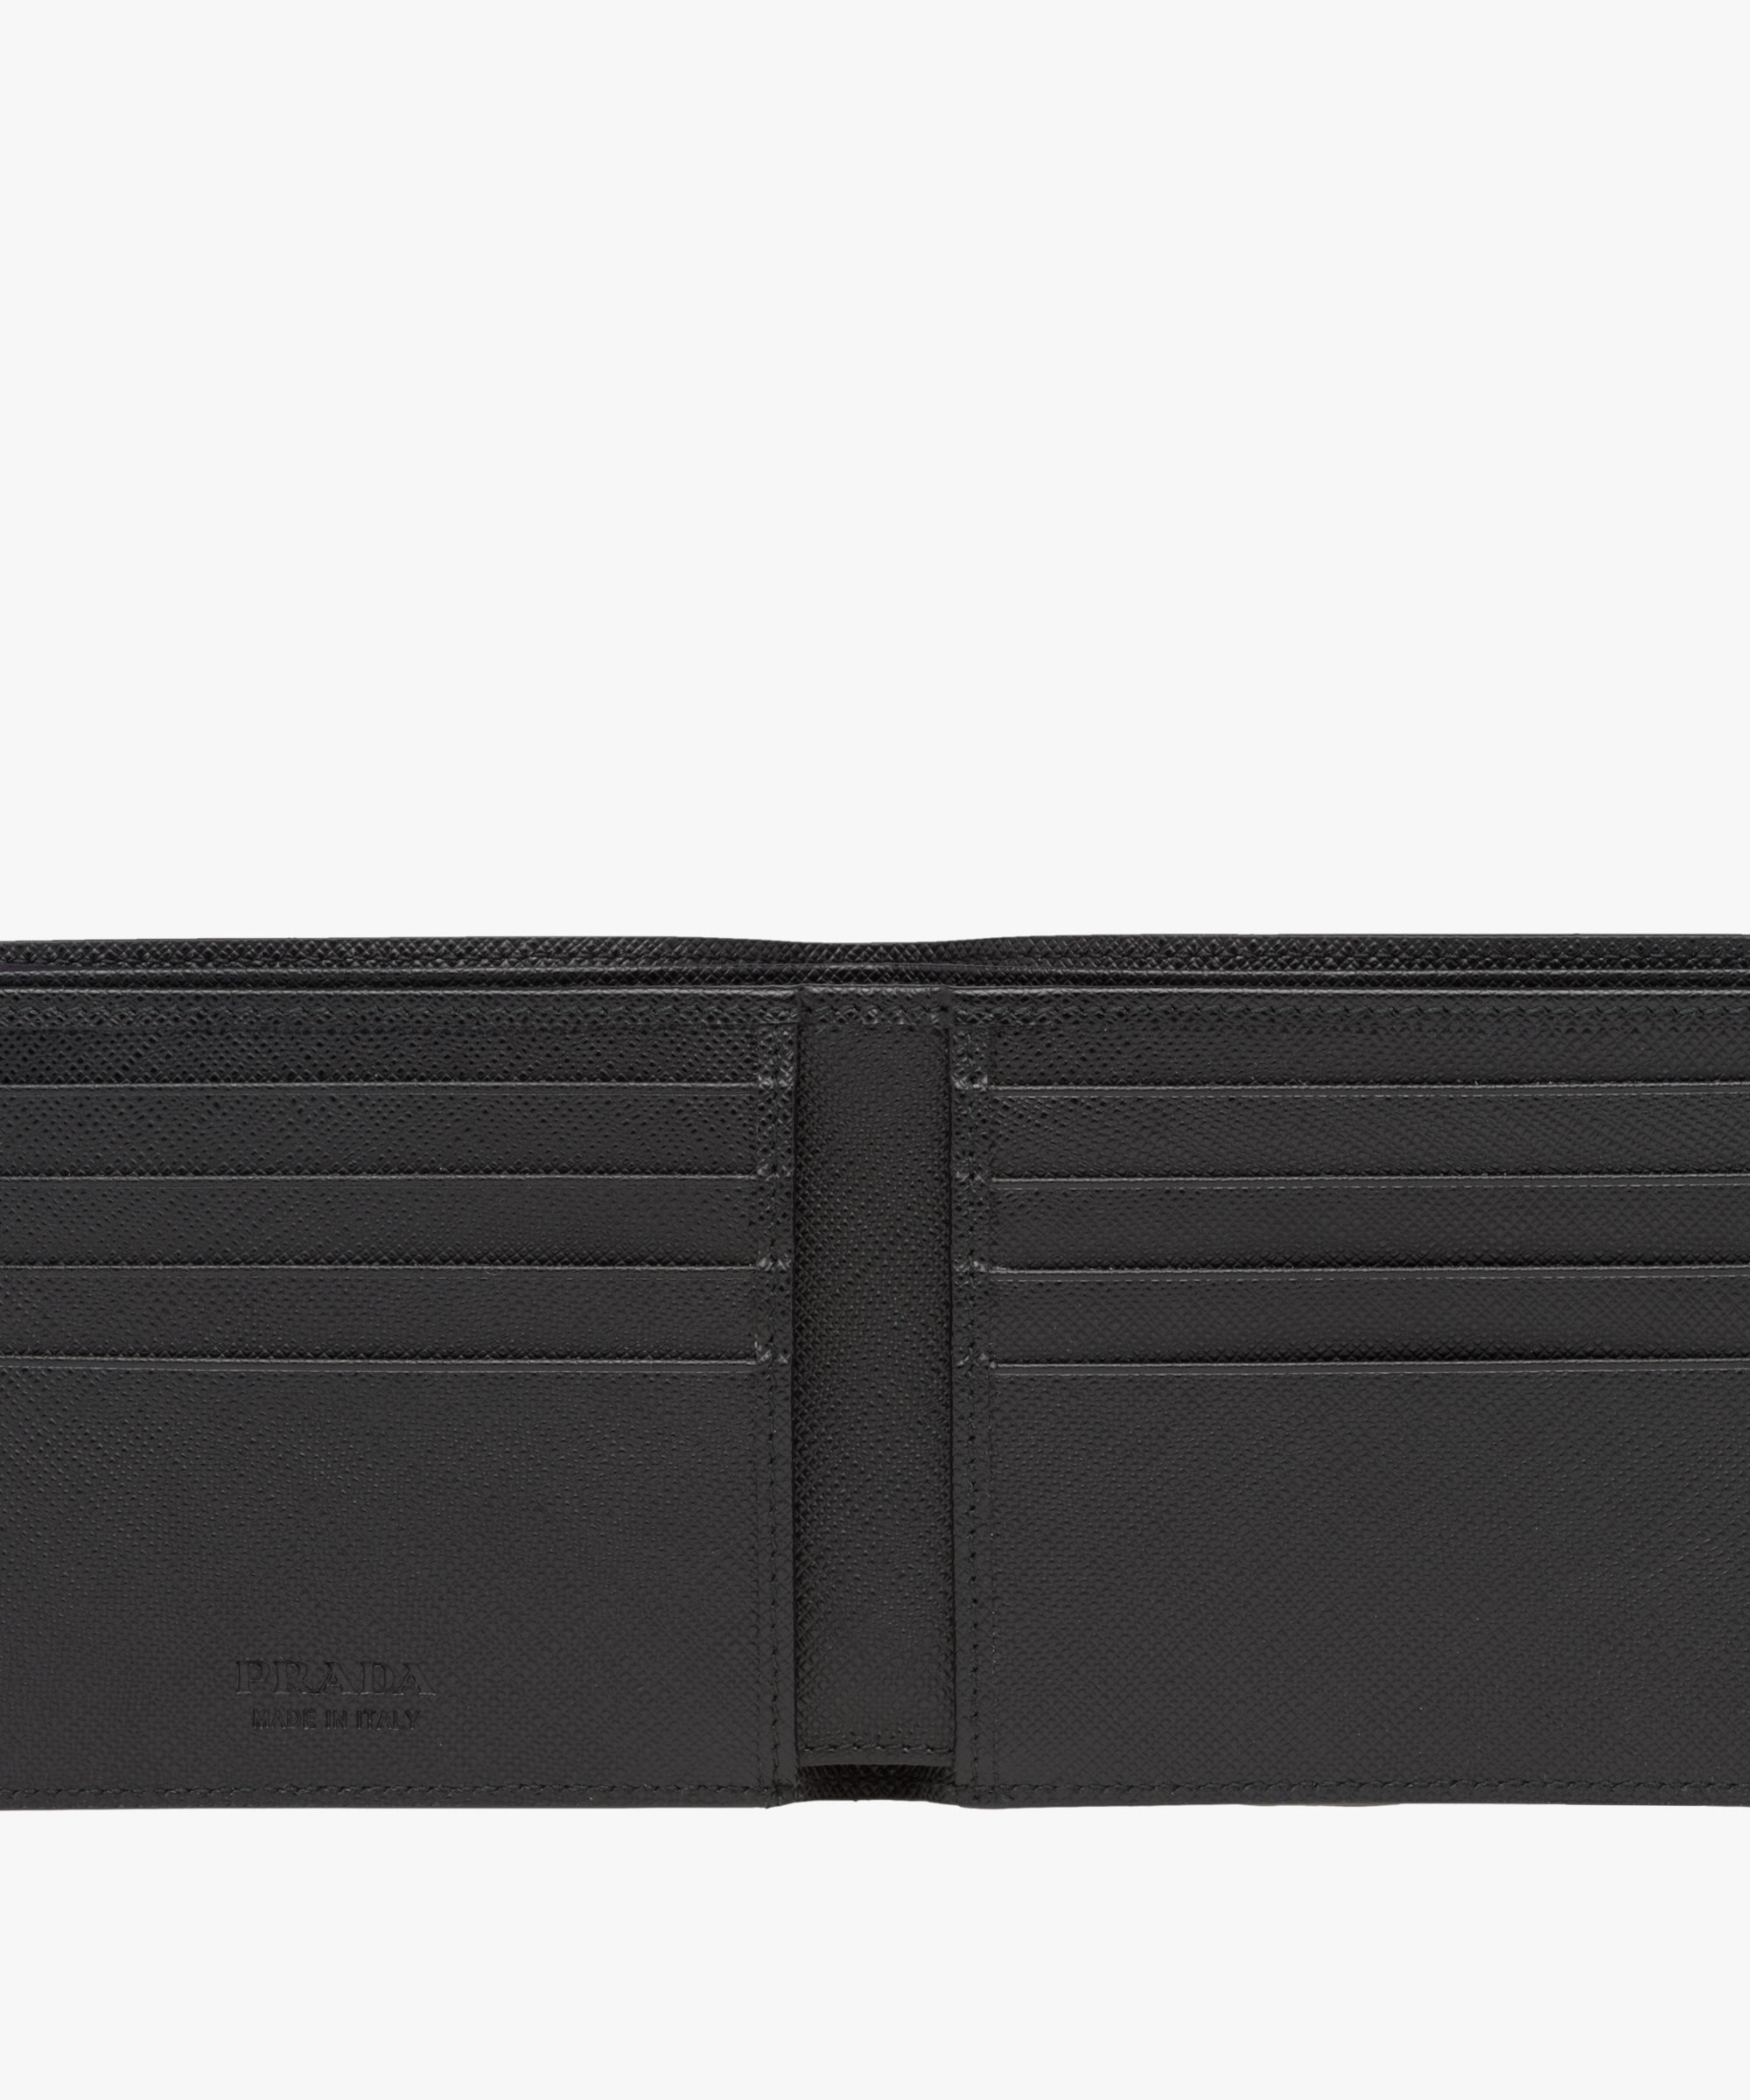 Prada Saffiano And Crocodile Leather Wallet in Black for Men - Lyst